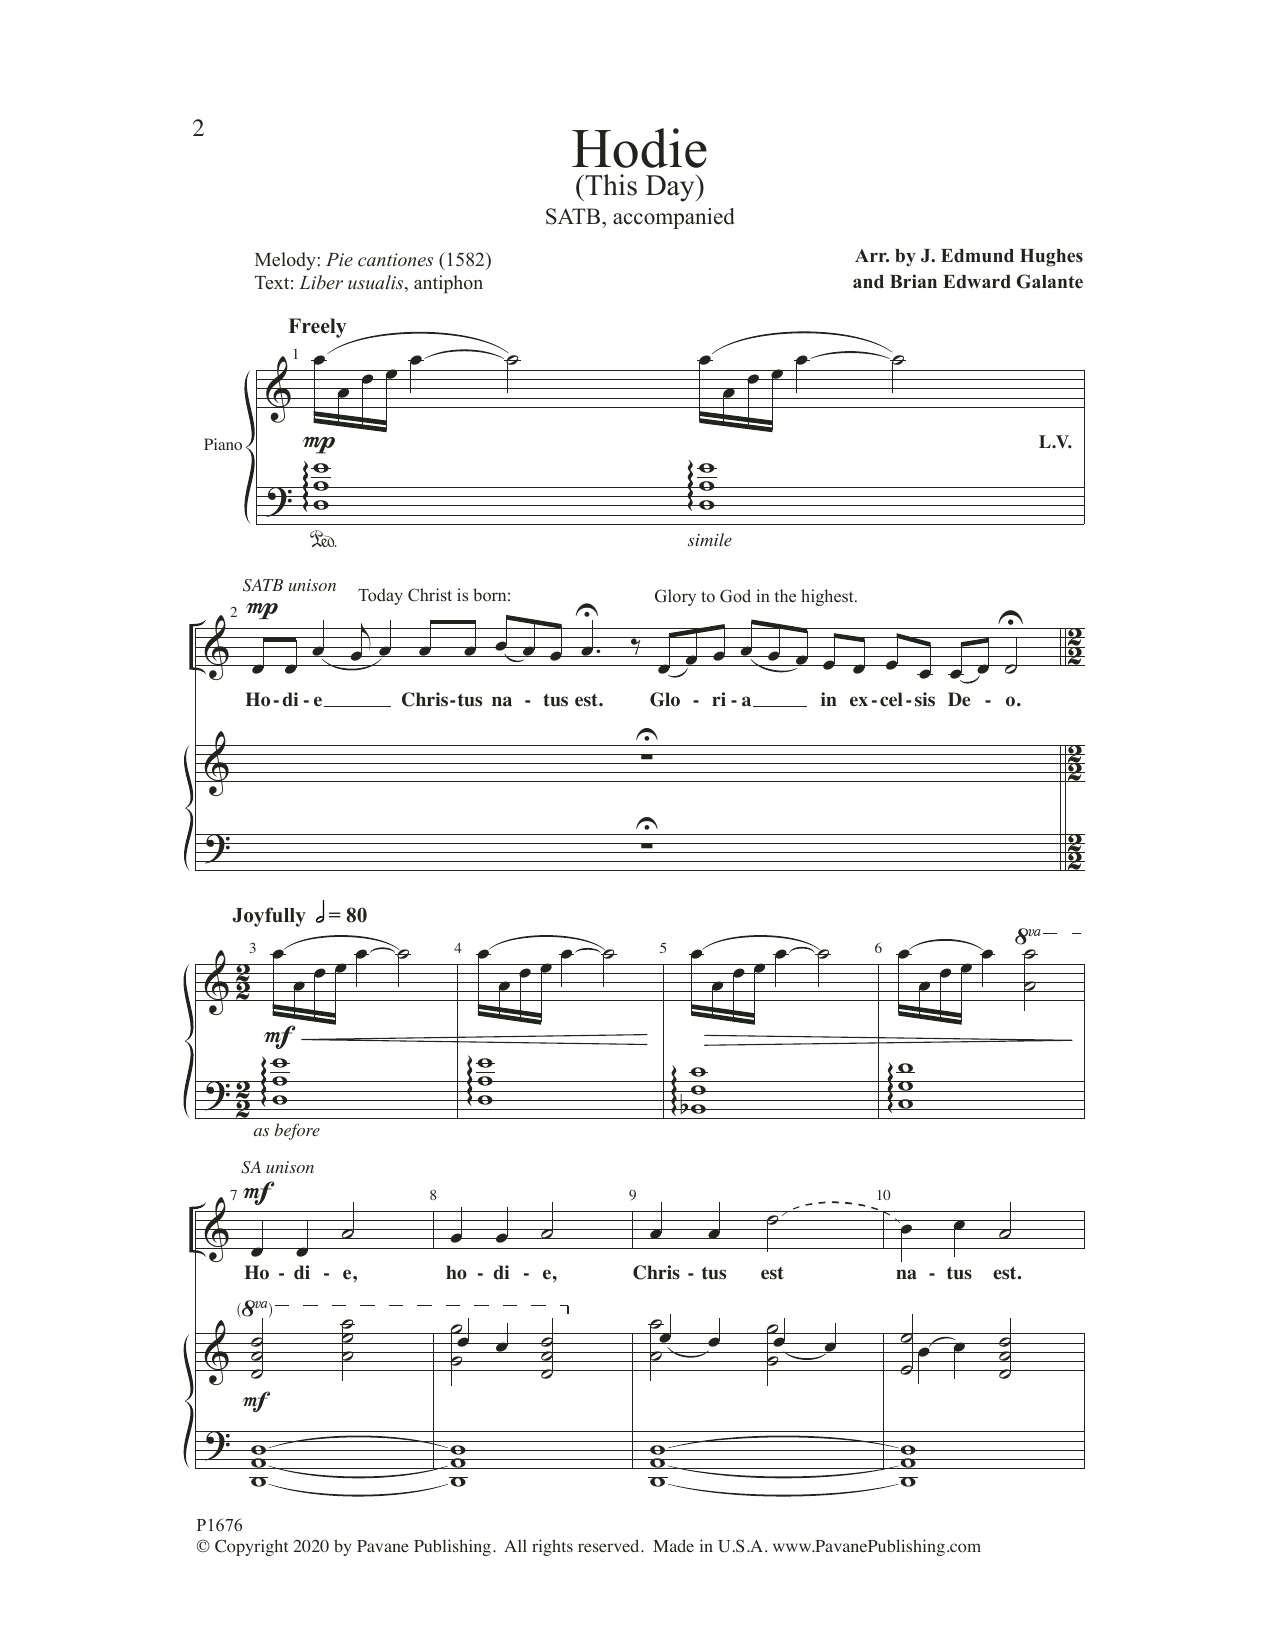 Brian Edward Galante and J. Edmund Hughes Hodie Sheet Music Notes & Chords for SATB Choir - Download or Print PDF